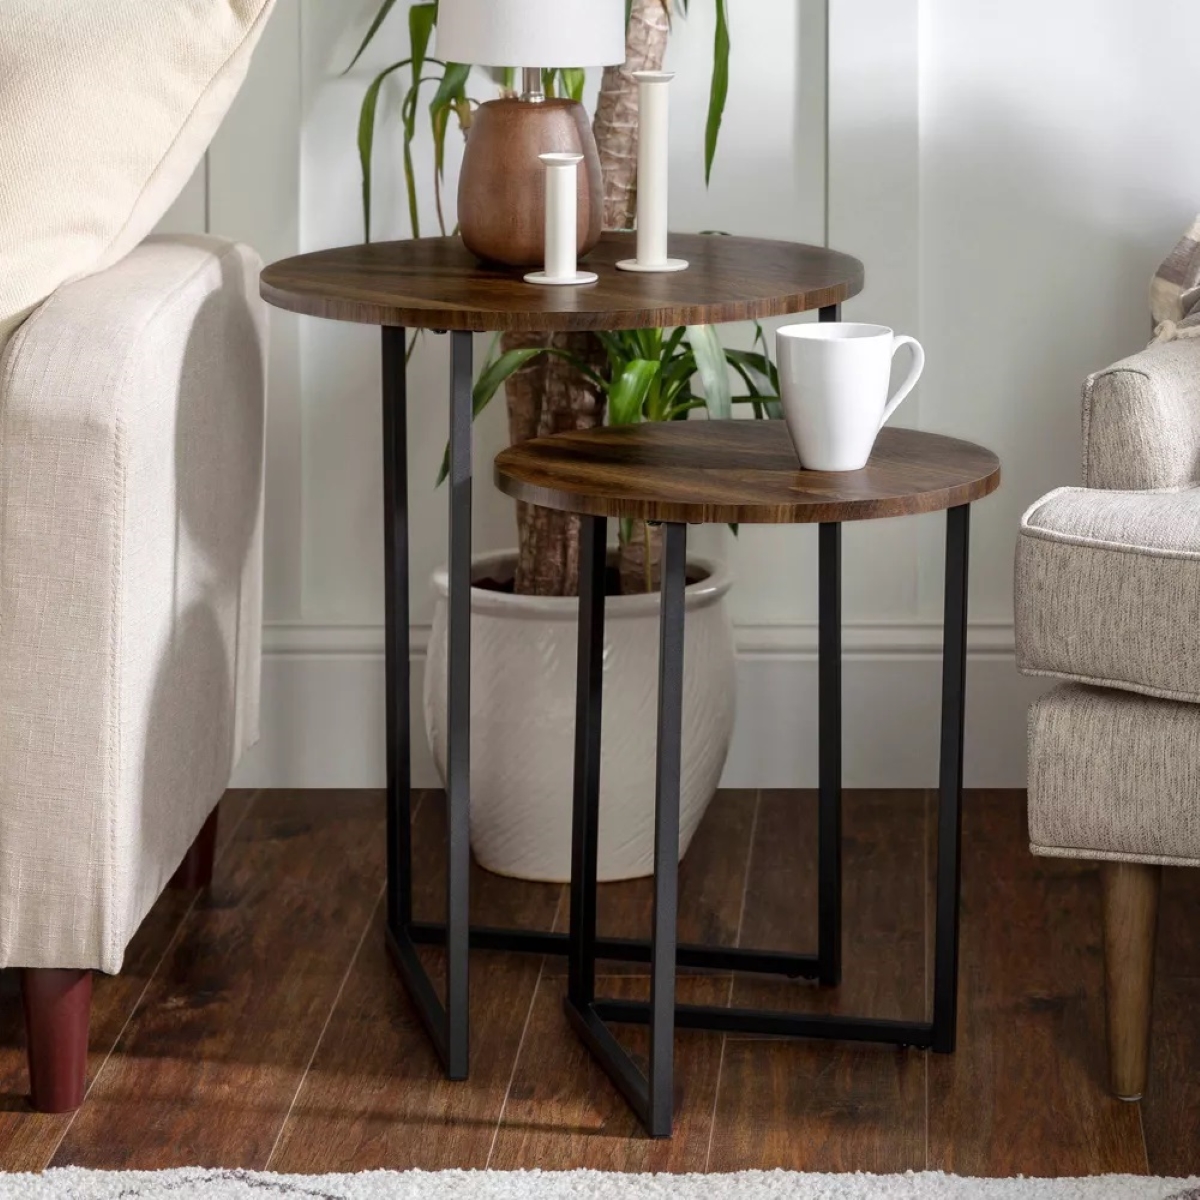 apartment decor ideas - nesting side tables